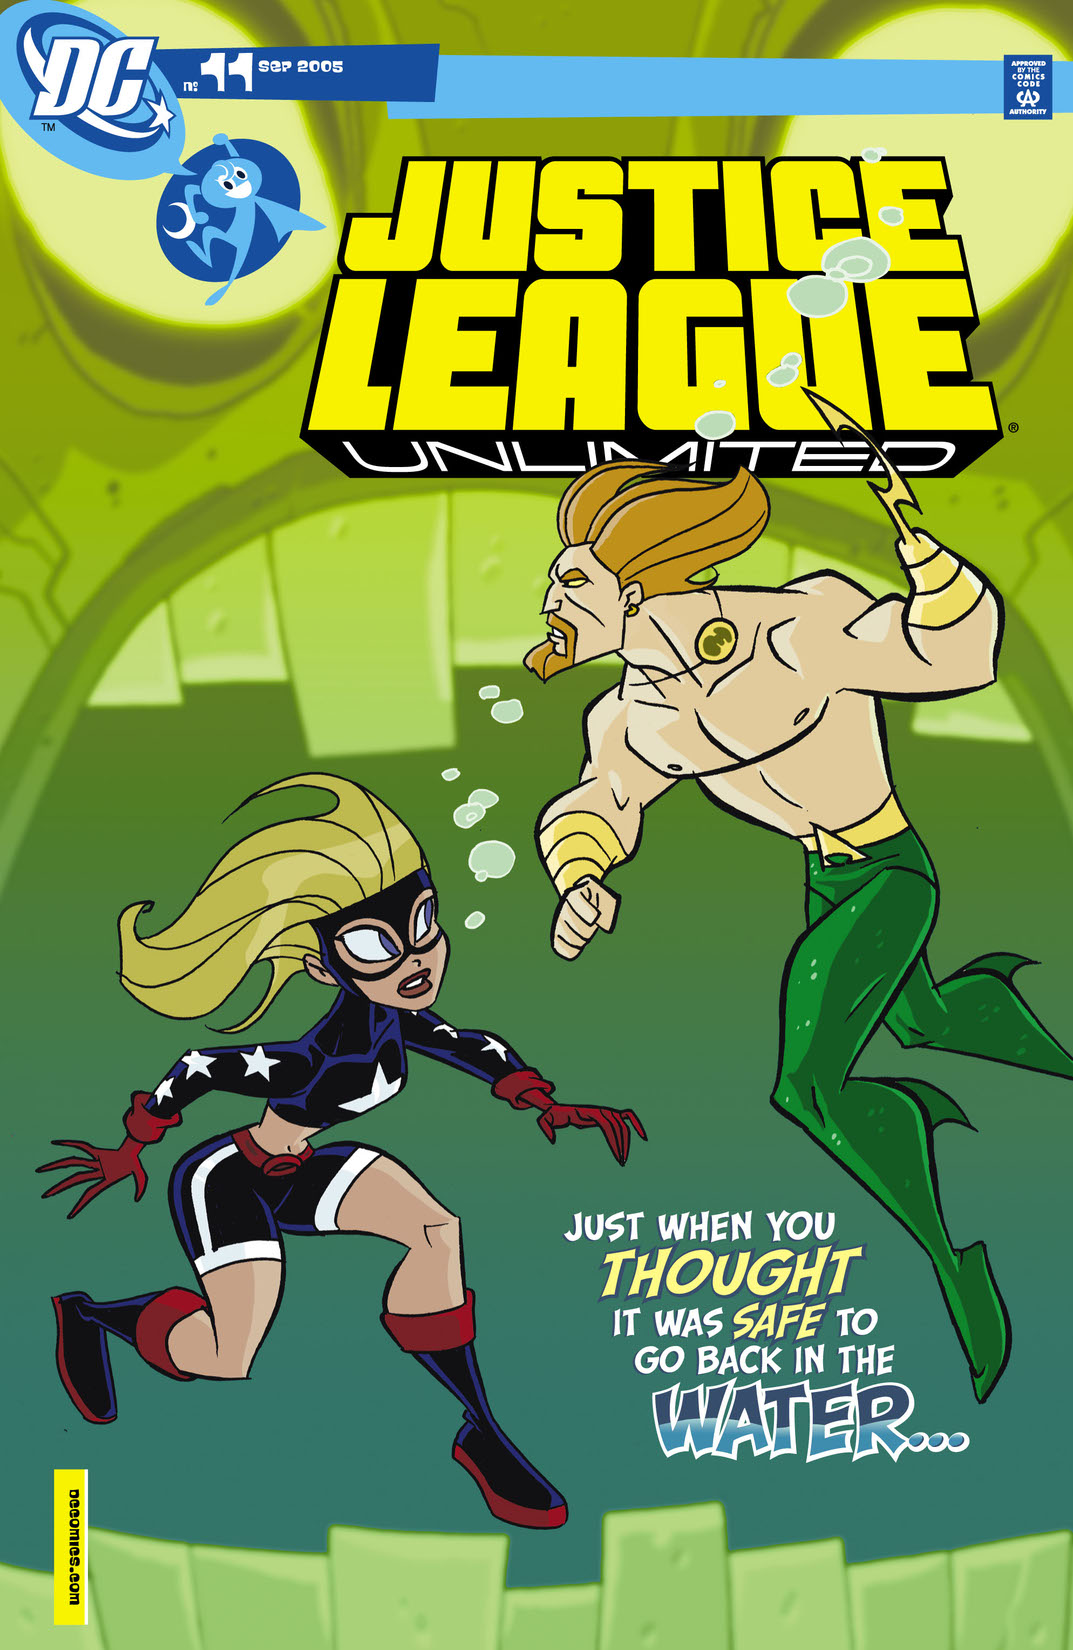 Justice League Unlimited #11 preview images